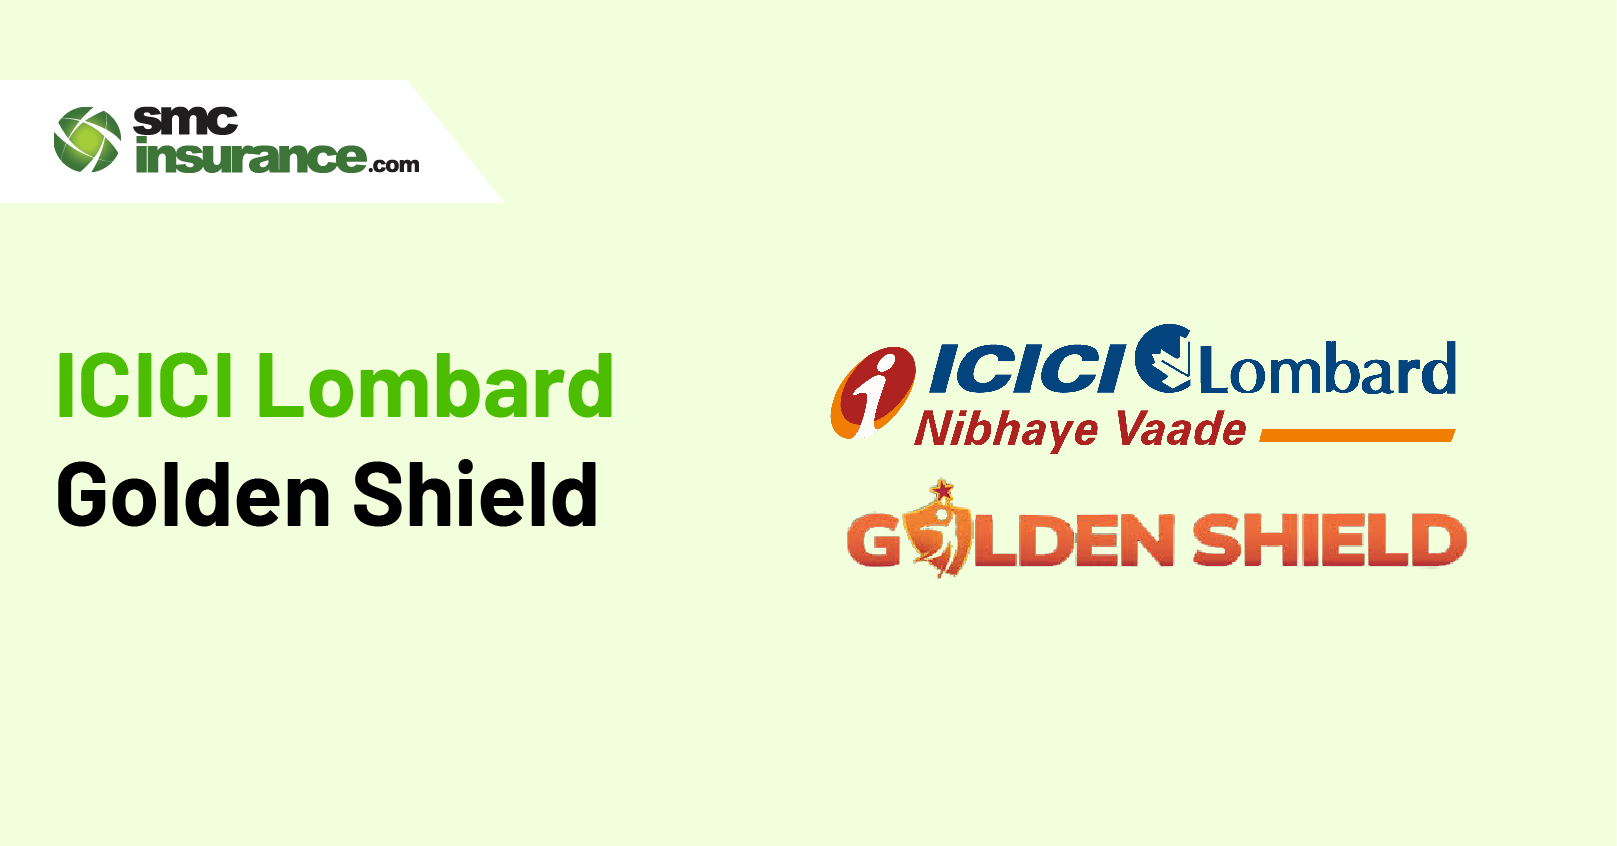 ICICI Lombard Golden Shield